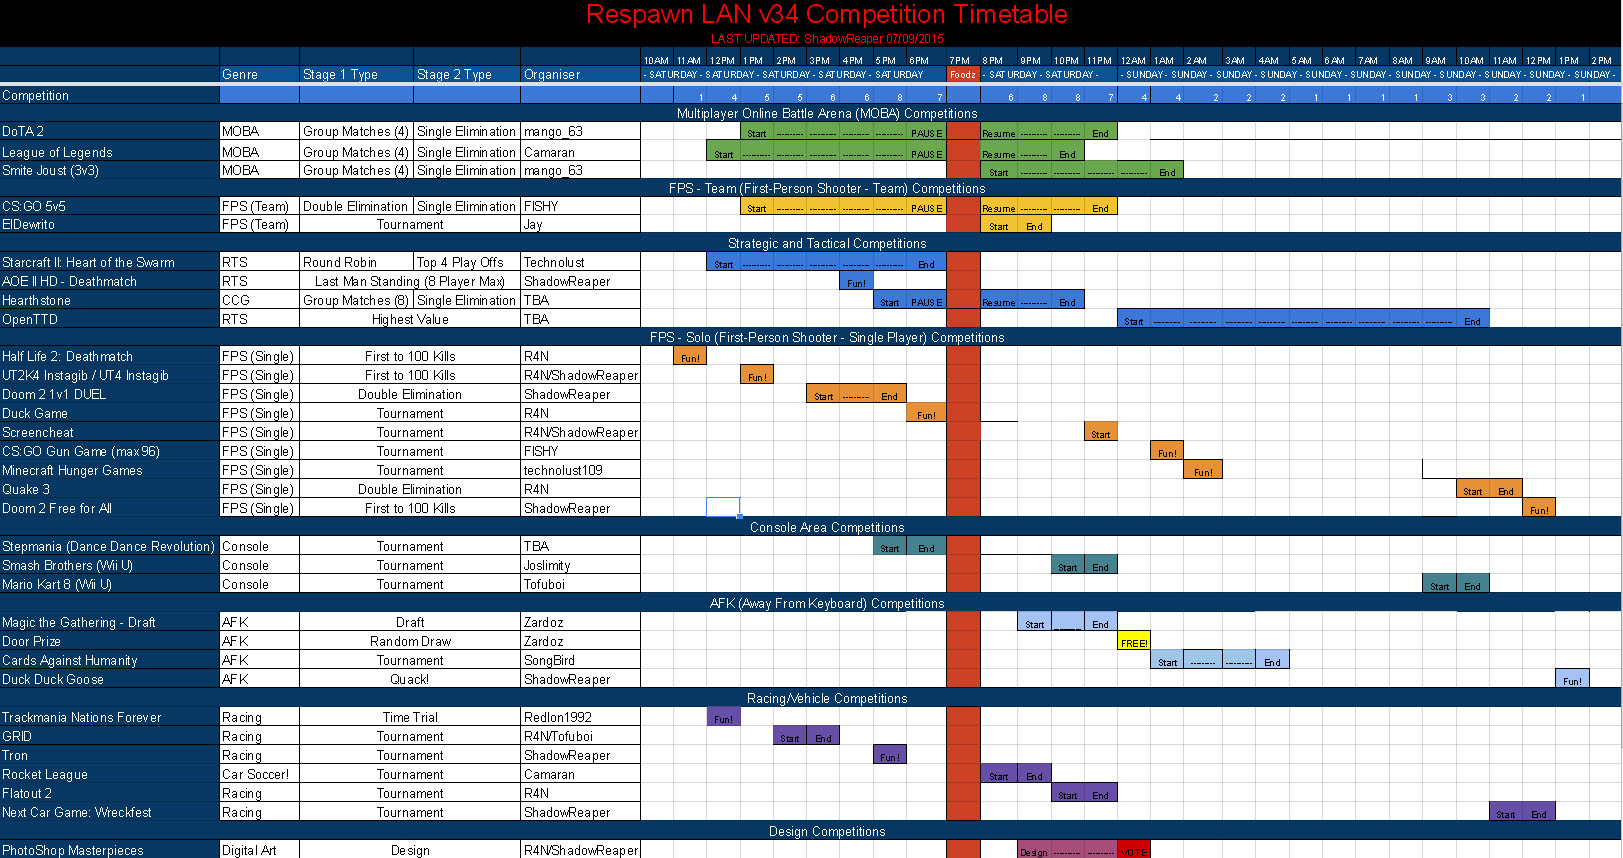 Respawn LAN v34 tournament timetable image